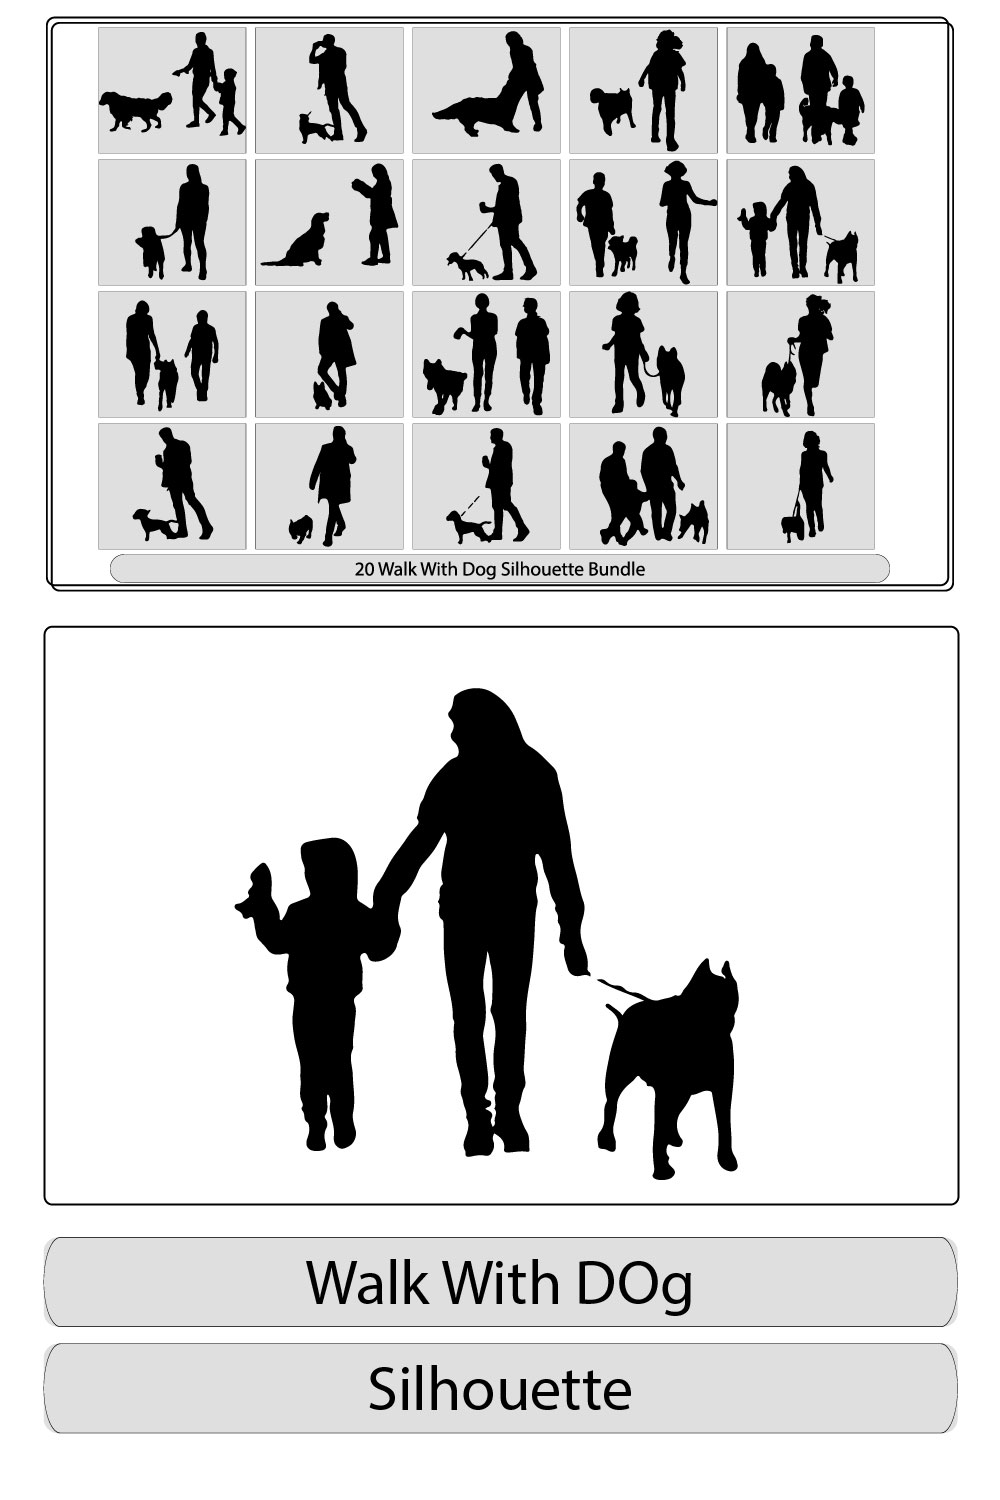 People walking with dogsA man walking his dog, Man Walking Dog,Black and white vector illustration pinterest preview image.